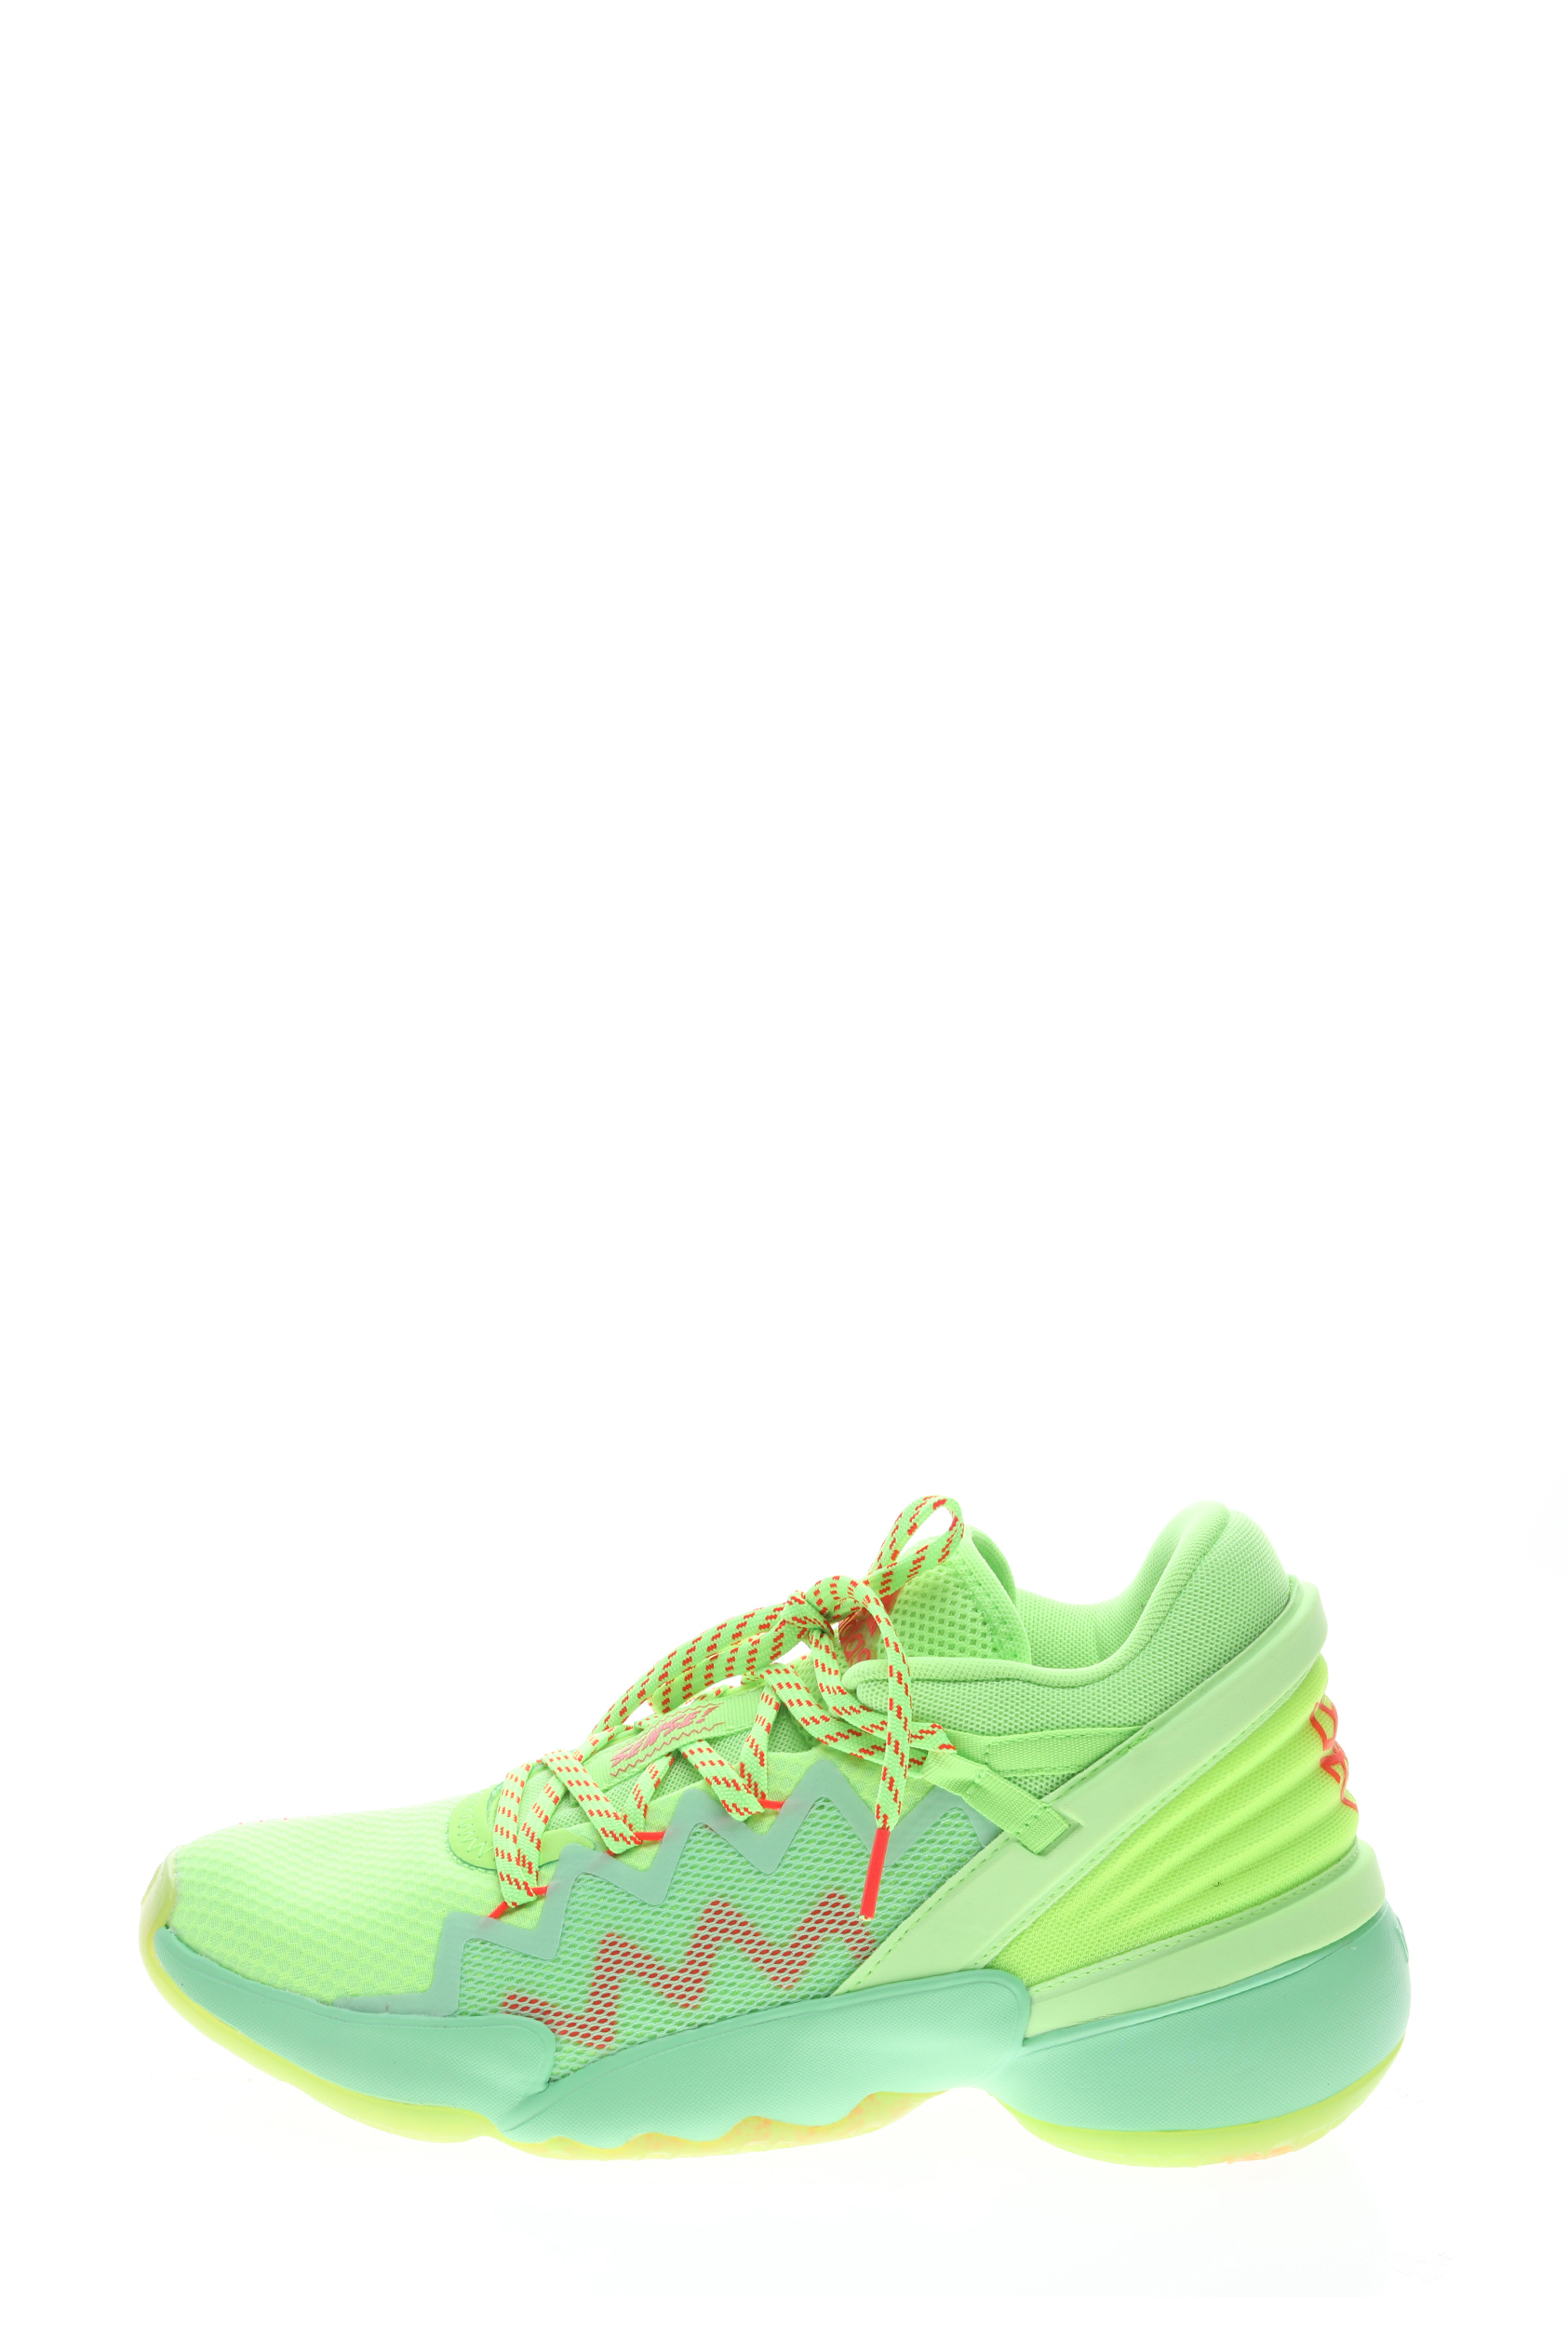 adidas Performance – Unisex παπουτσια basketball adidas Performance D.O.N. Issue 2 πρασινα